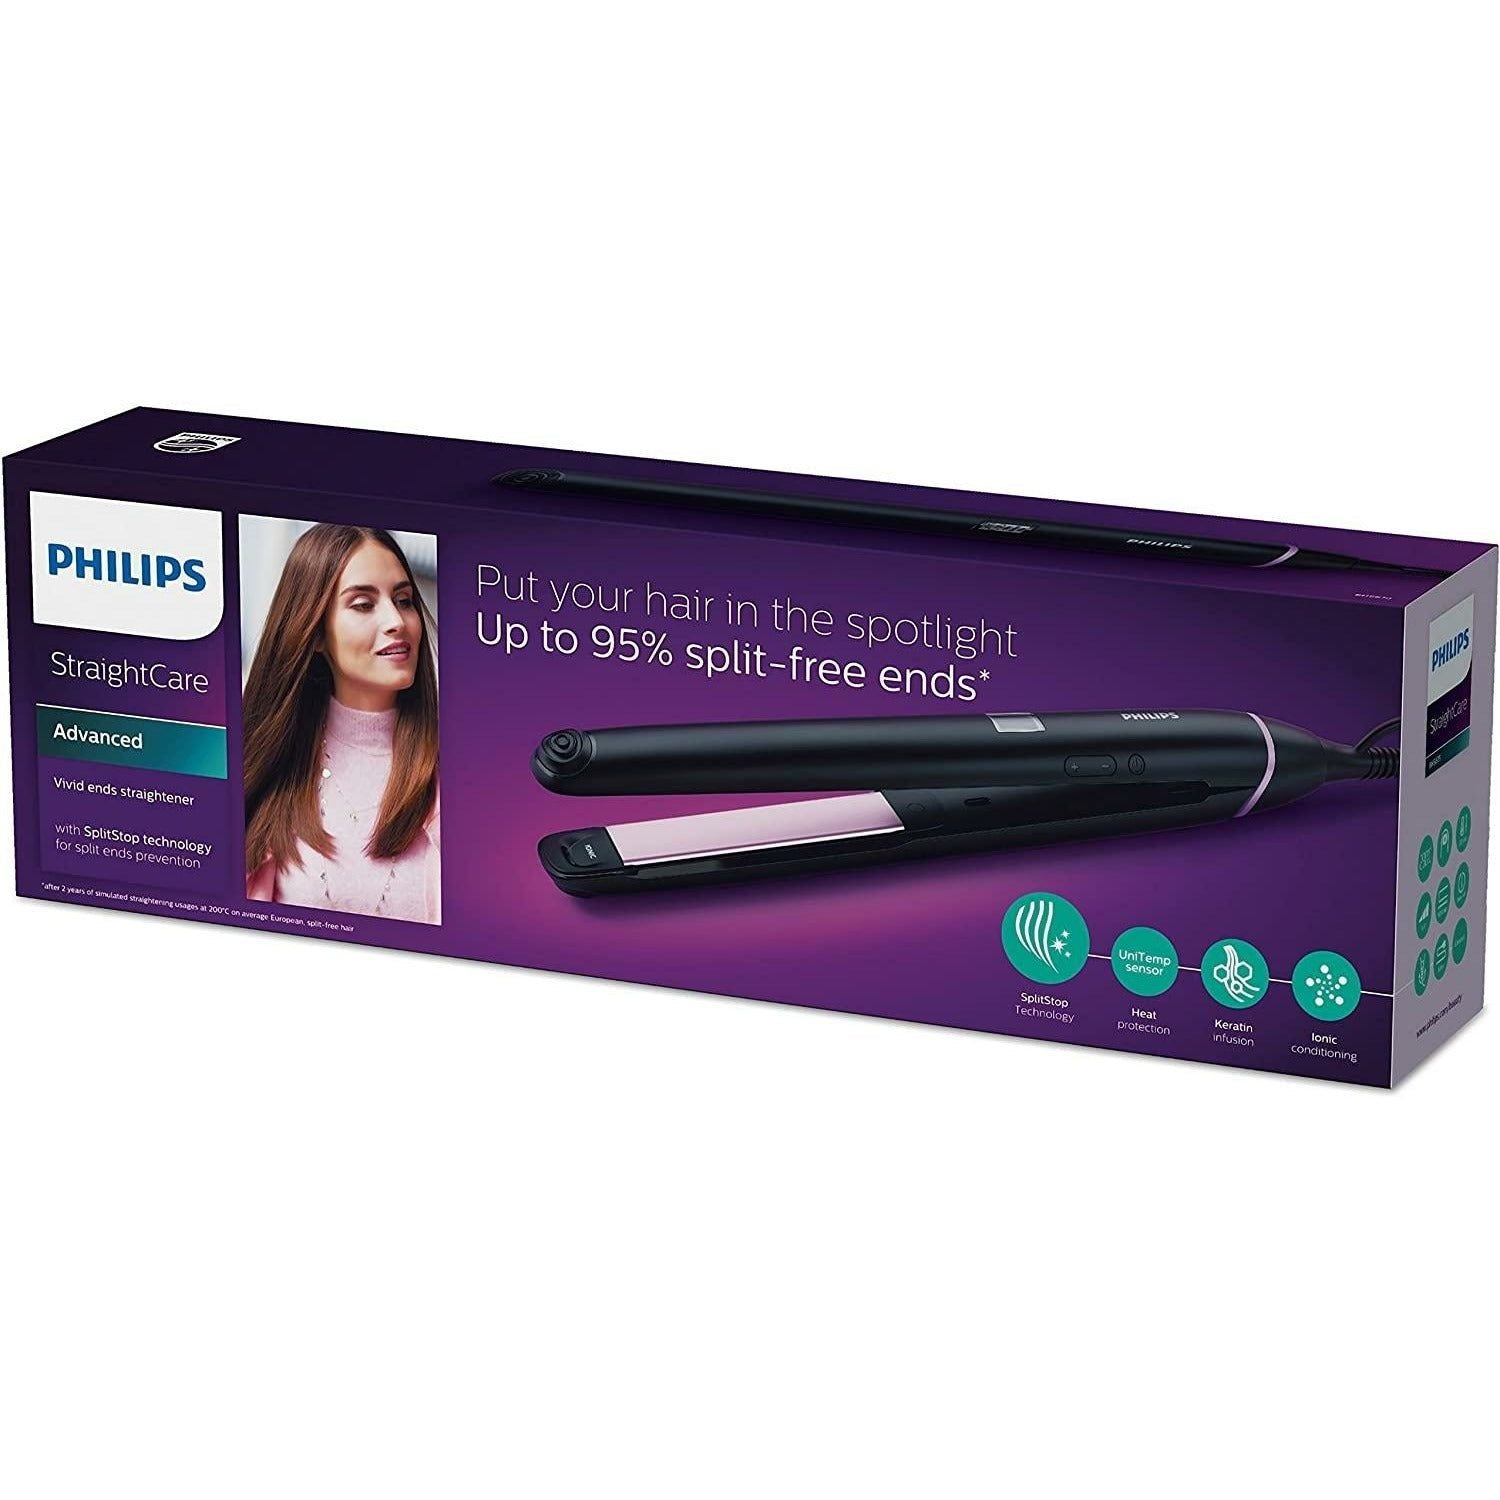 Buy Philips Hair Straightener Online at Best Price in India | Myntra